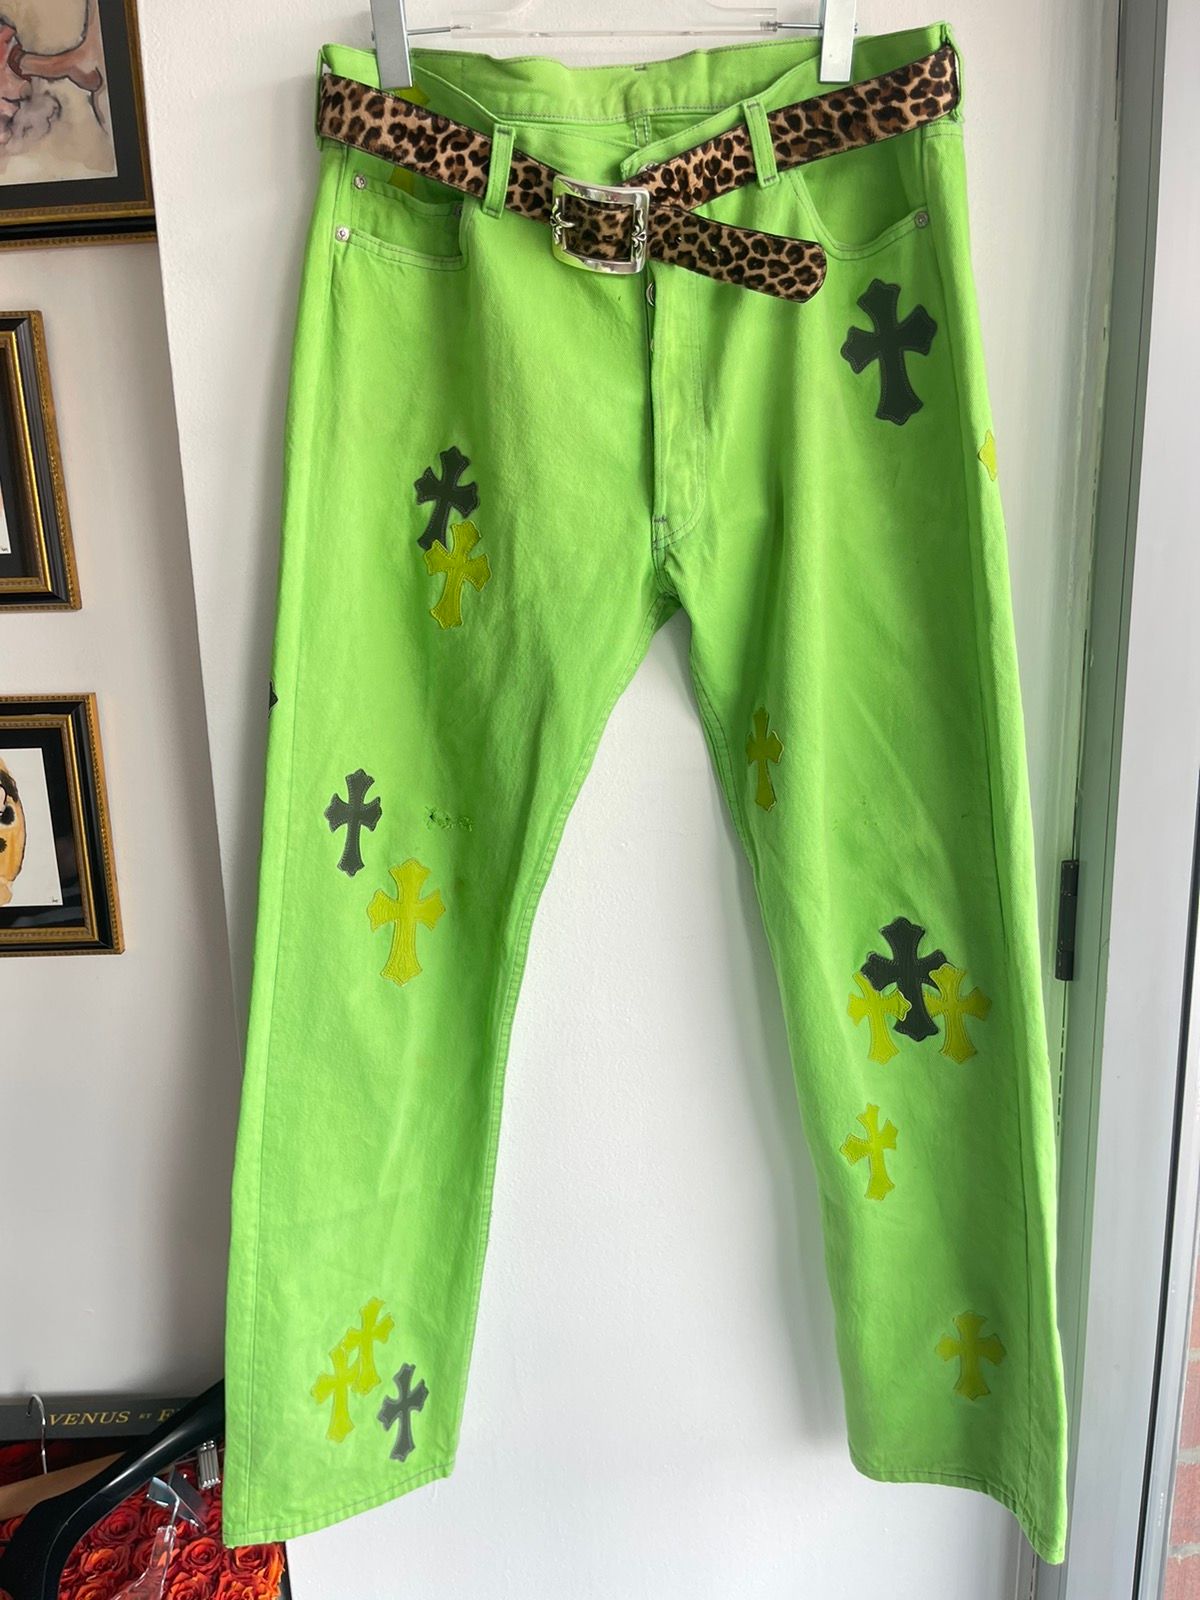 Chrome Hearts Green/Cheetah Cross Denim Jeans Black